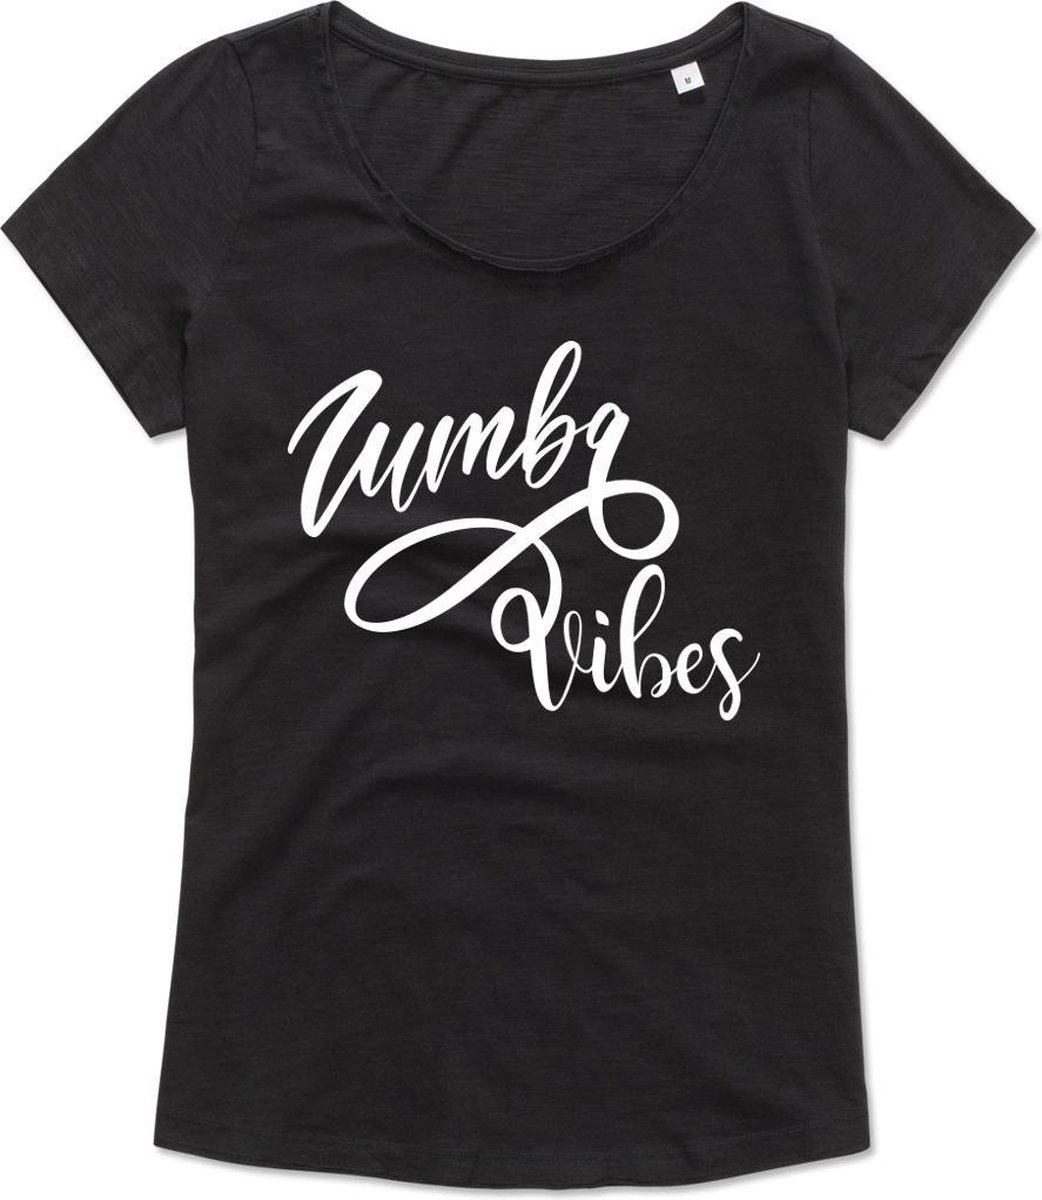 Zumba T-shirt - Workout T-shirt - Dance T-shirt, dans t-shirt, sport t-shirt, Gym T-shirt, Lifestyle T-shirt - Zumba Vibes – S